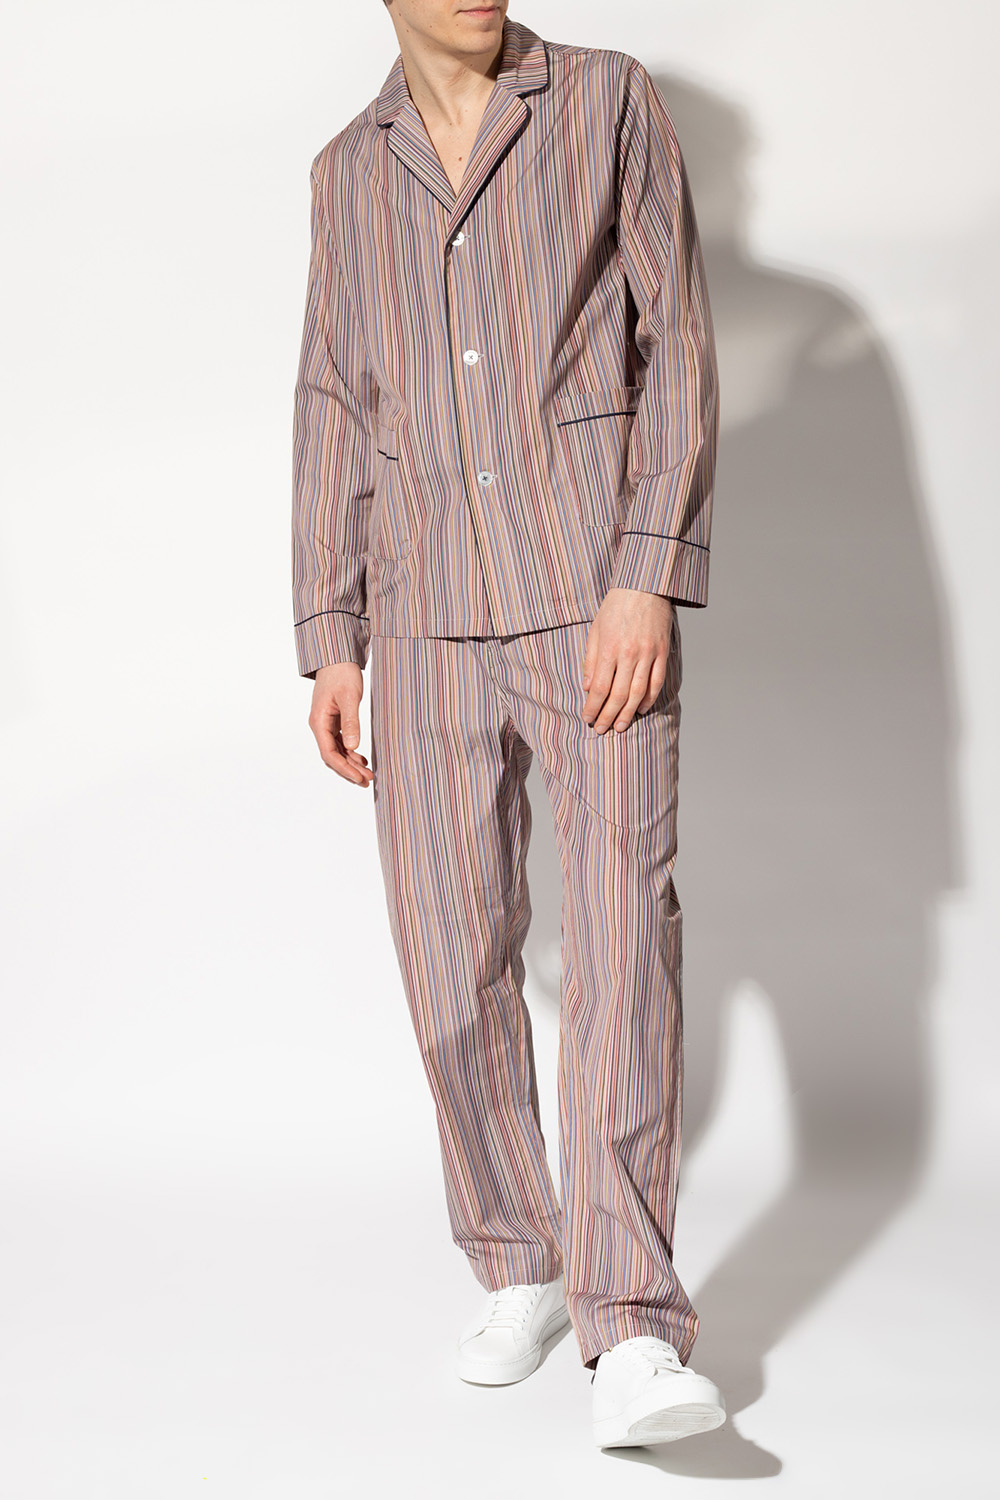 Paul Smith Two-piece pyjama set | Men's Clothing | Vitkac